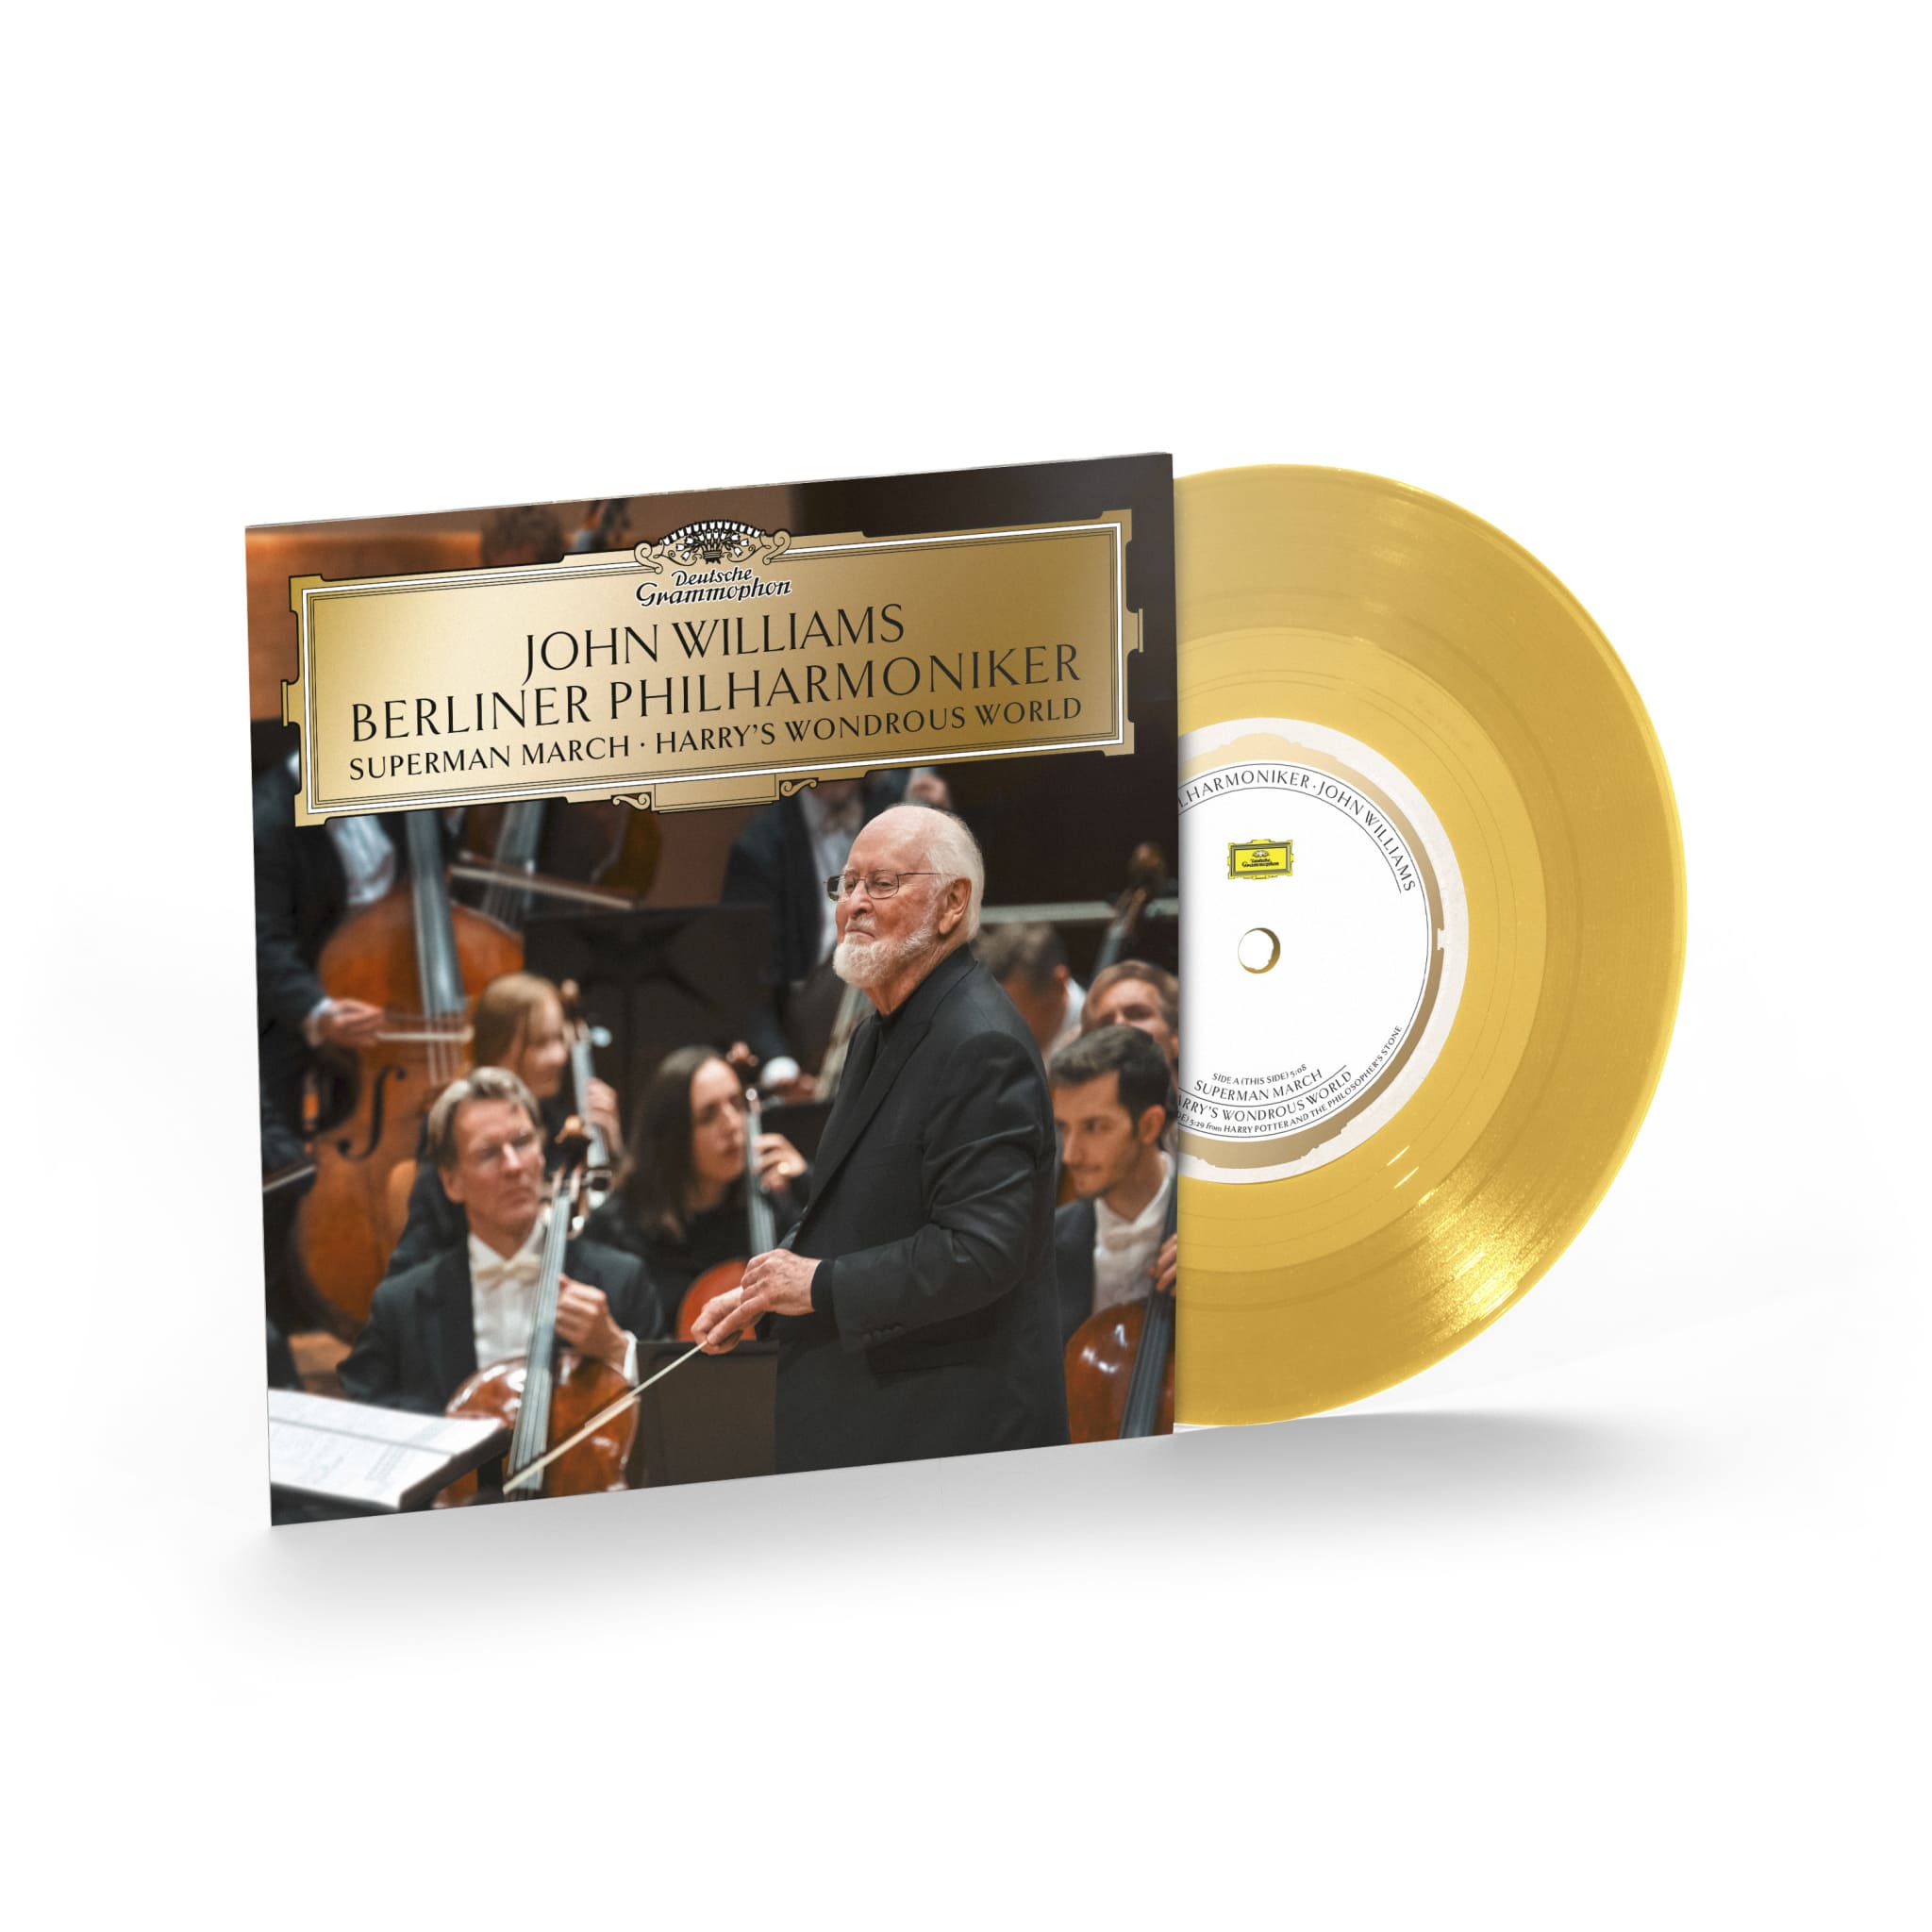 The Berlin Concert von John Williams / Berliner Philharmoniker - Ltd Excl Gold 7inch jetzt im Deutsche Grammophon Store